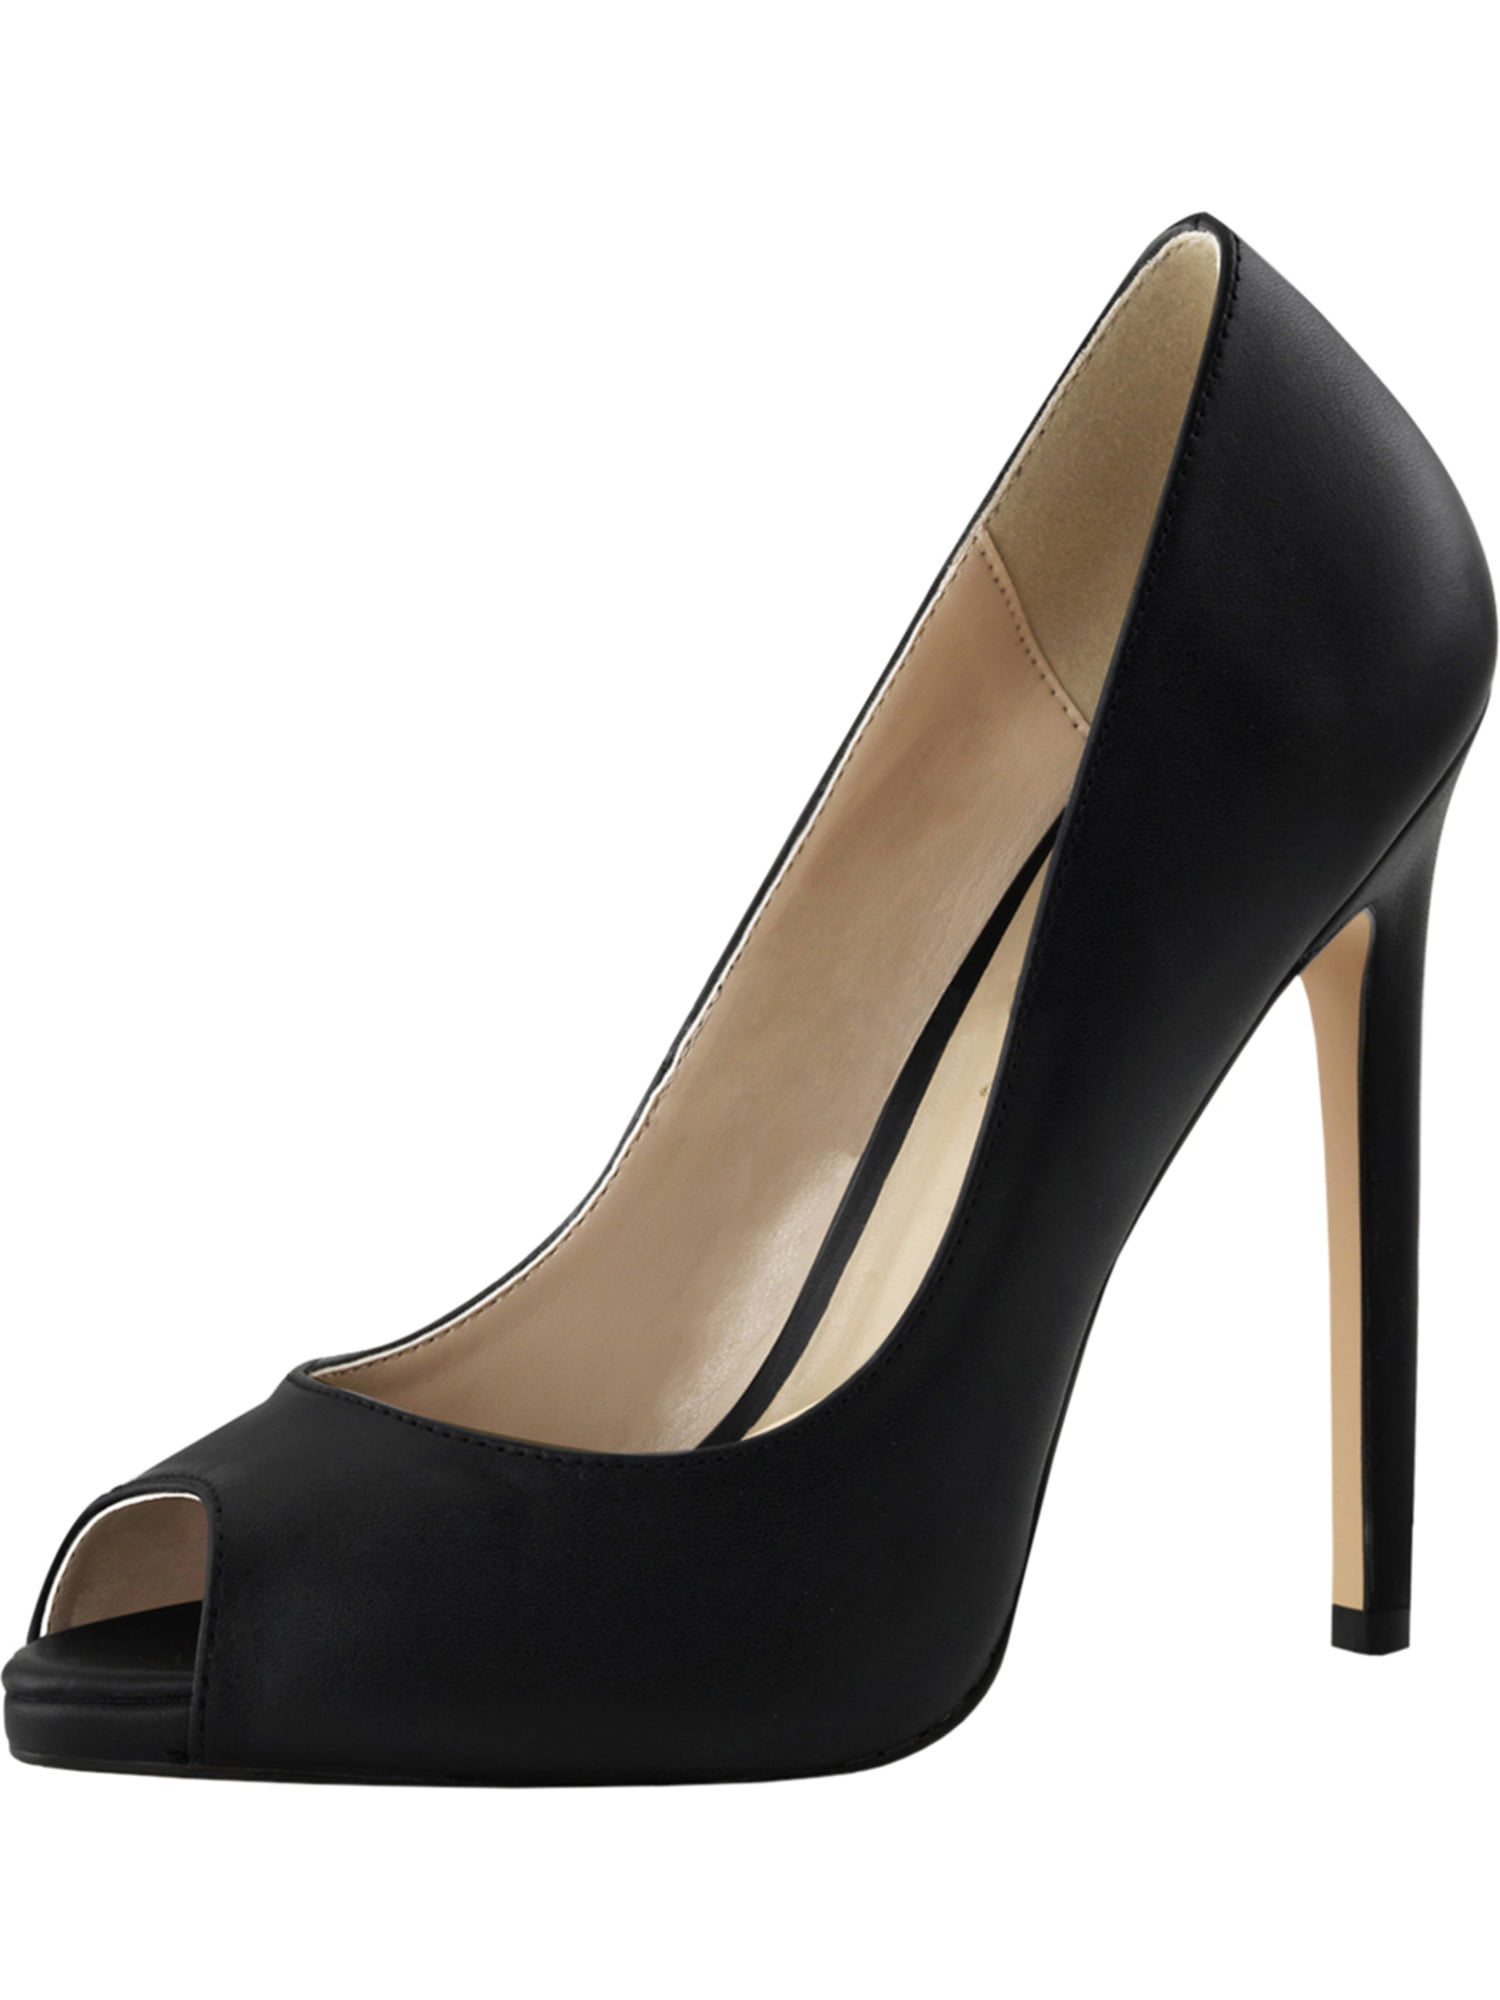 Pleaser - Womens Black Stiletto Heels Peep Toe Pumps Black Leather ...